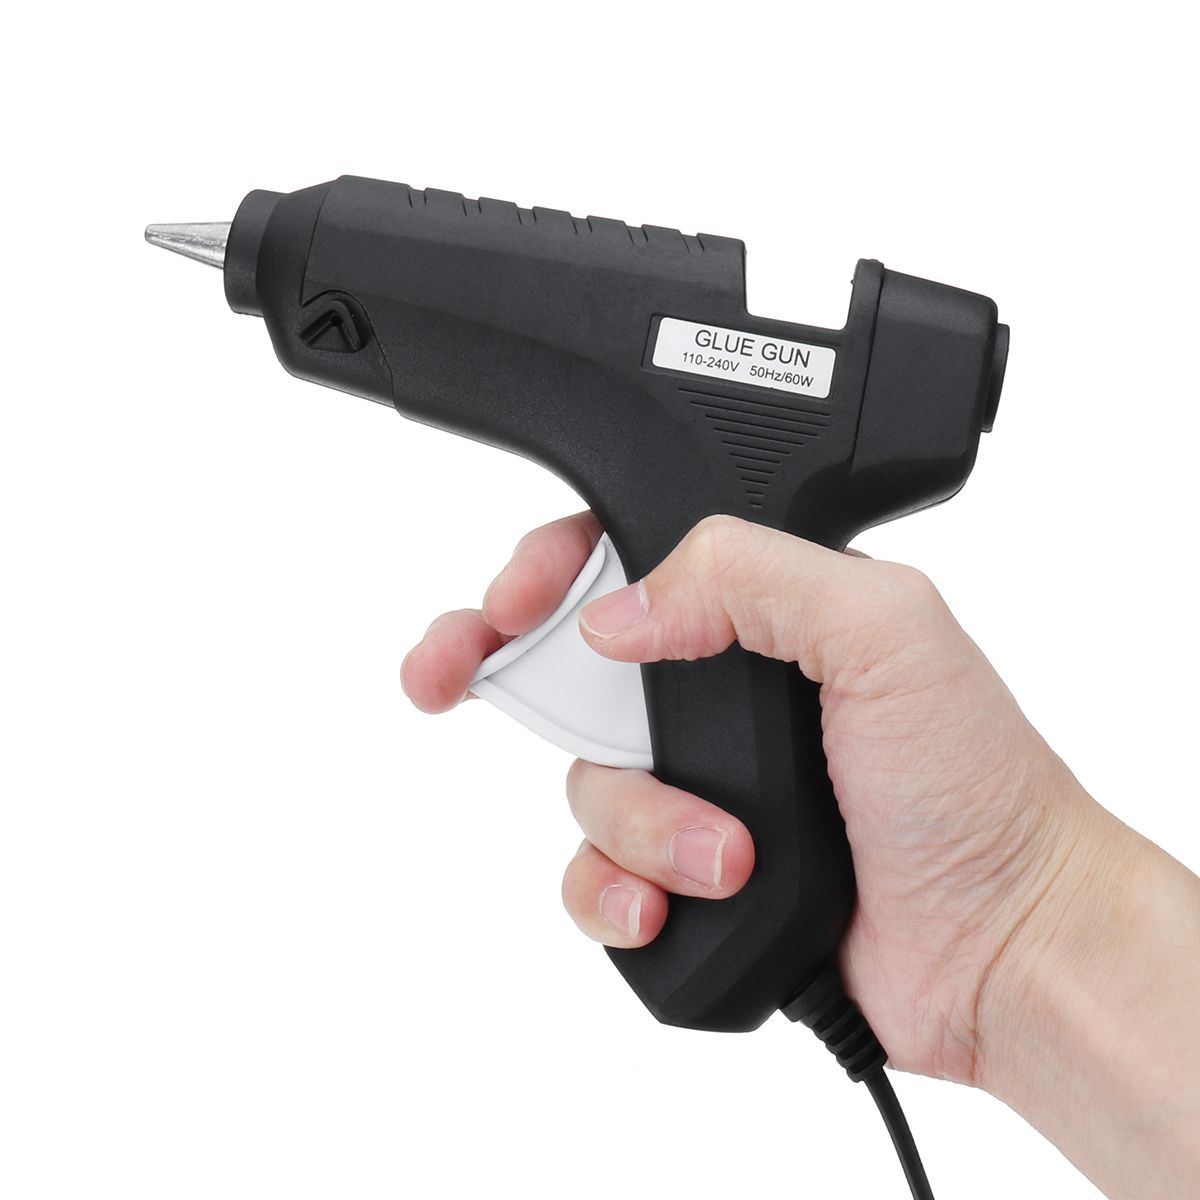 110-240V-60W-Dent-Dent-Puller-Tool-Kit-Dent-Paintless-Repair-PDR-Tools-with-Hot-Melt-Glue-Gun-1349624